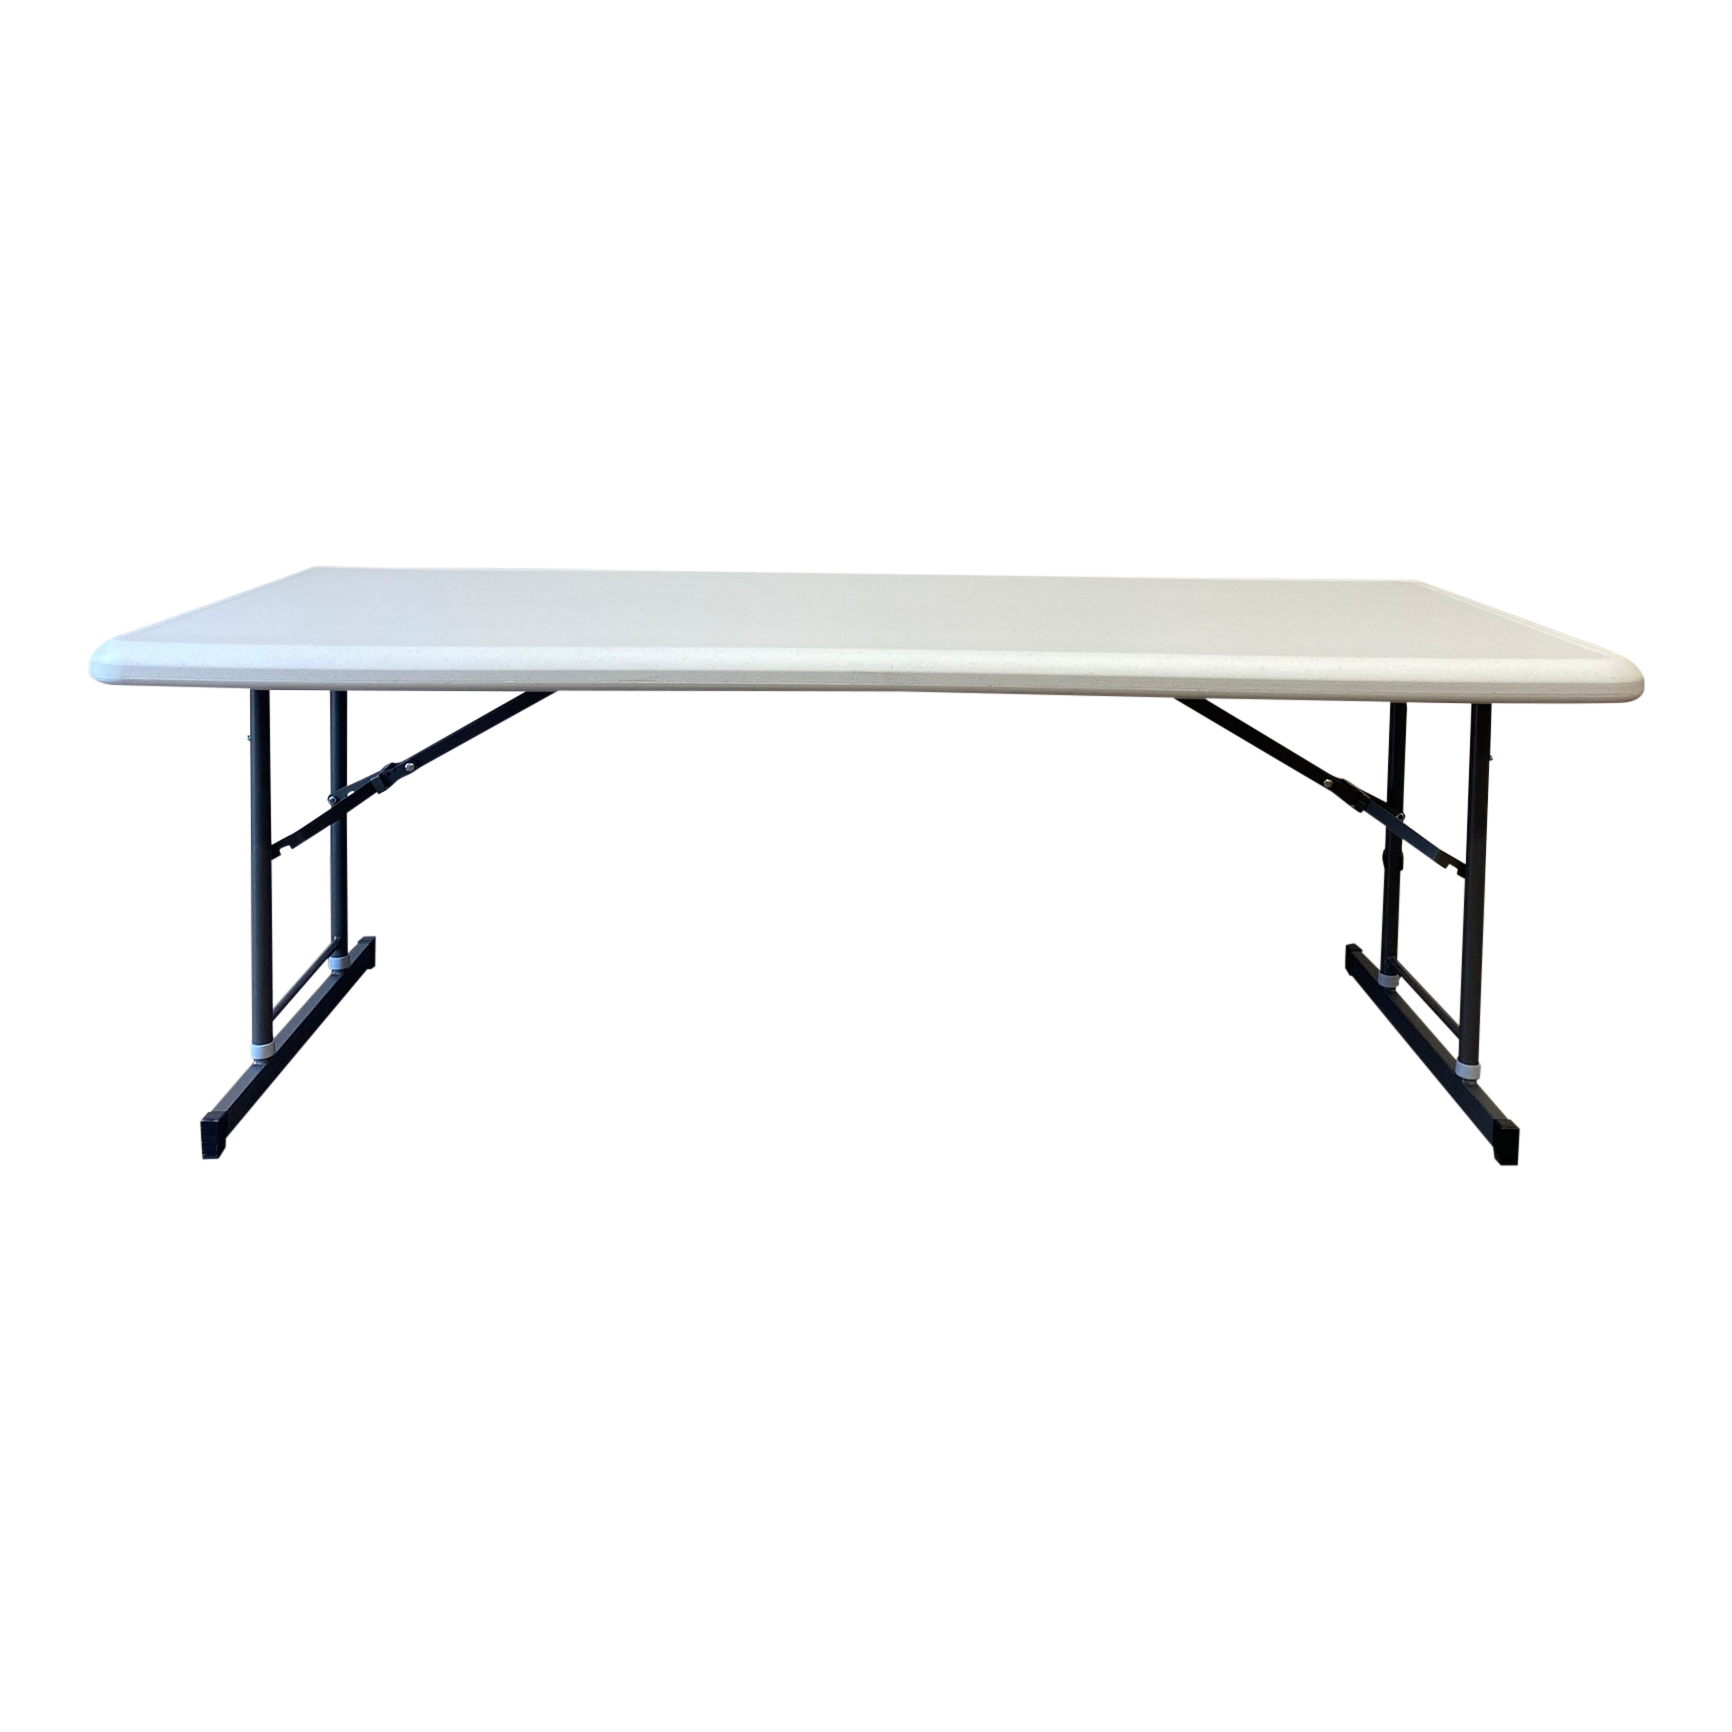 A platinum six-foot adjustable height folding table.